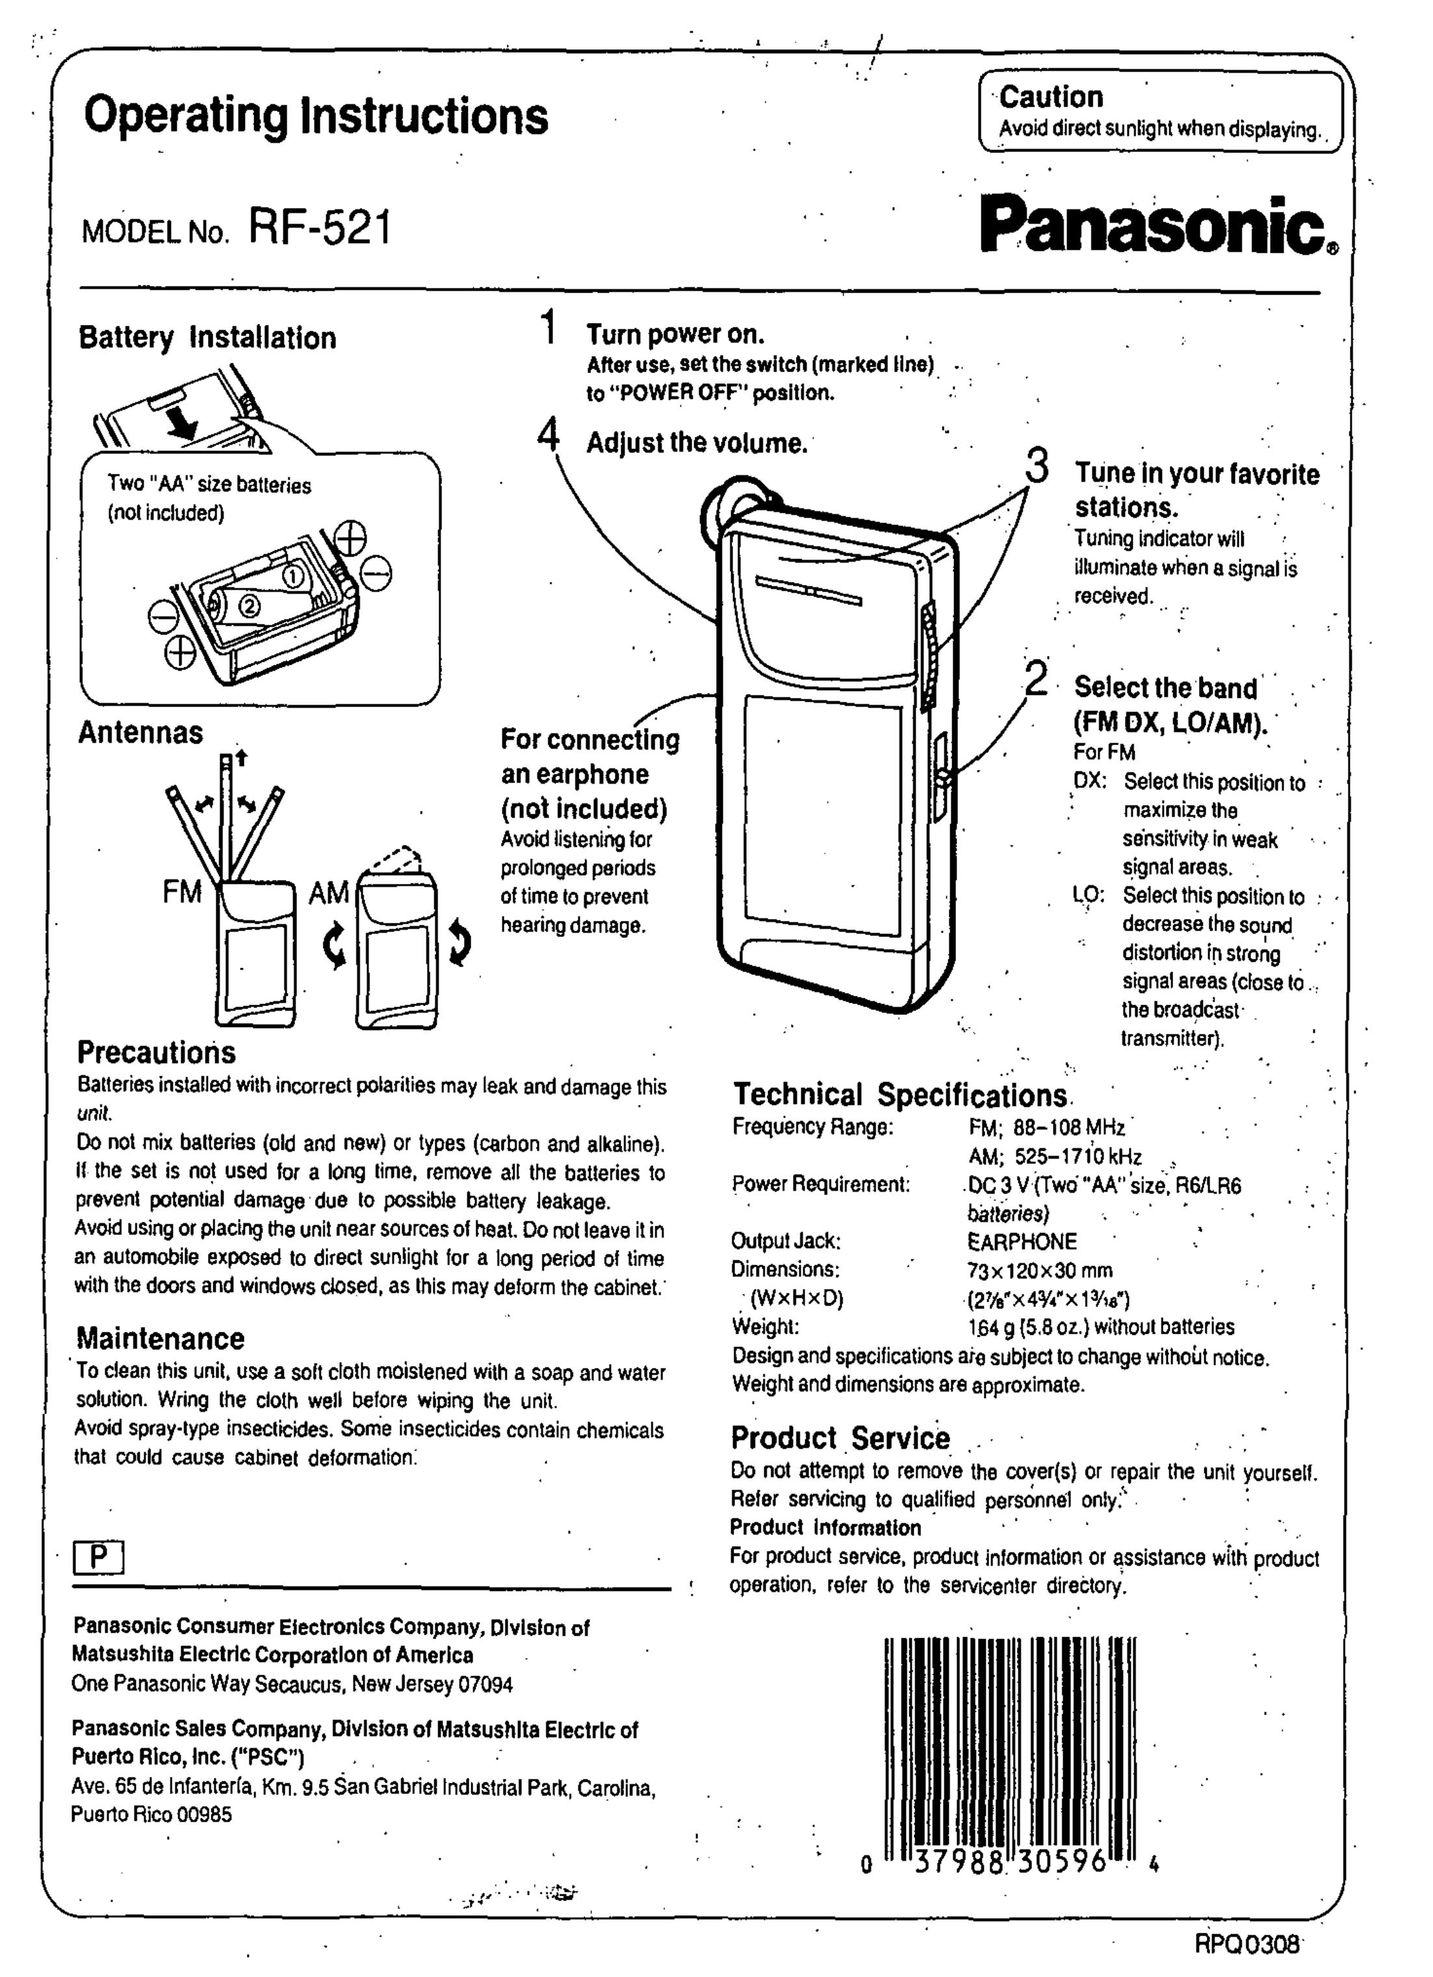 Panasonic RF-521 Portable Radio User Manual